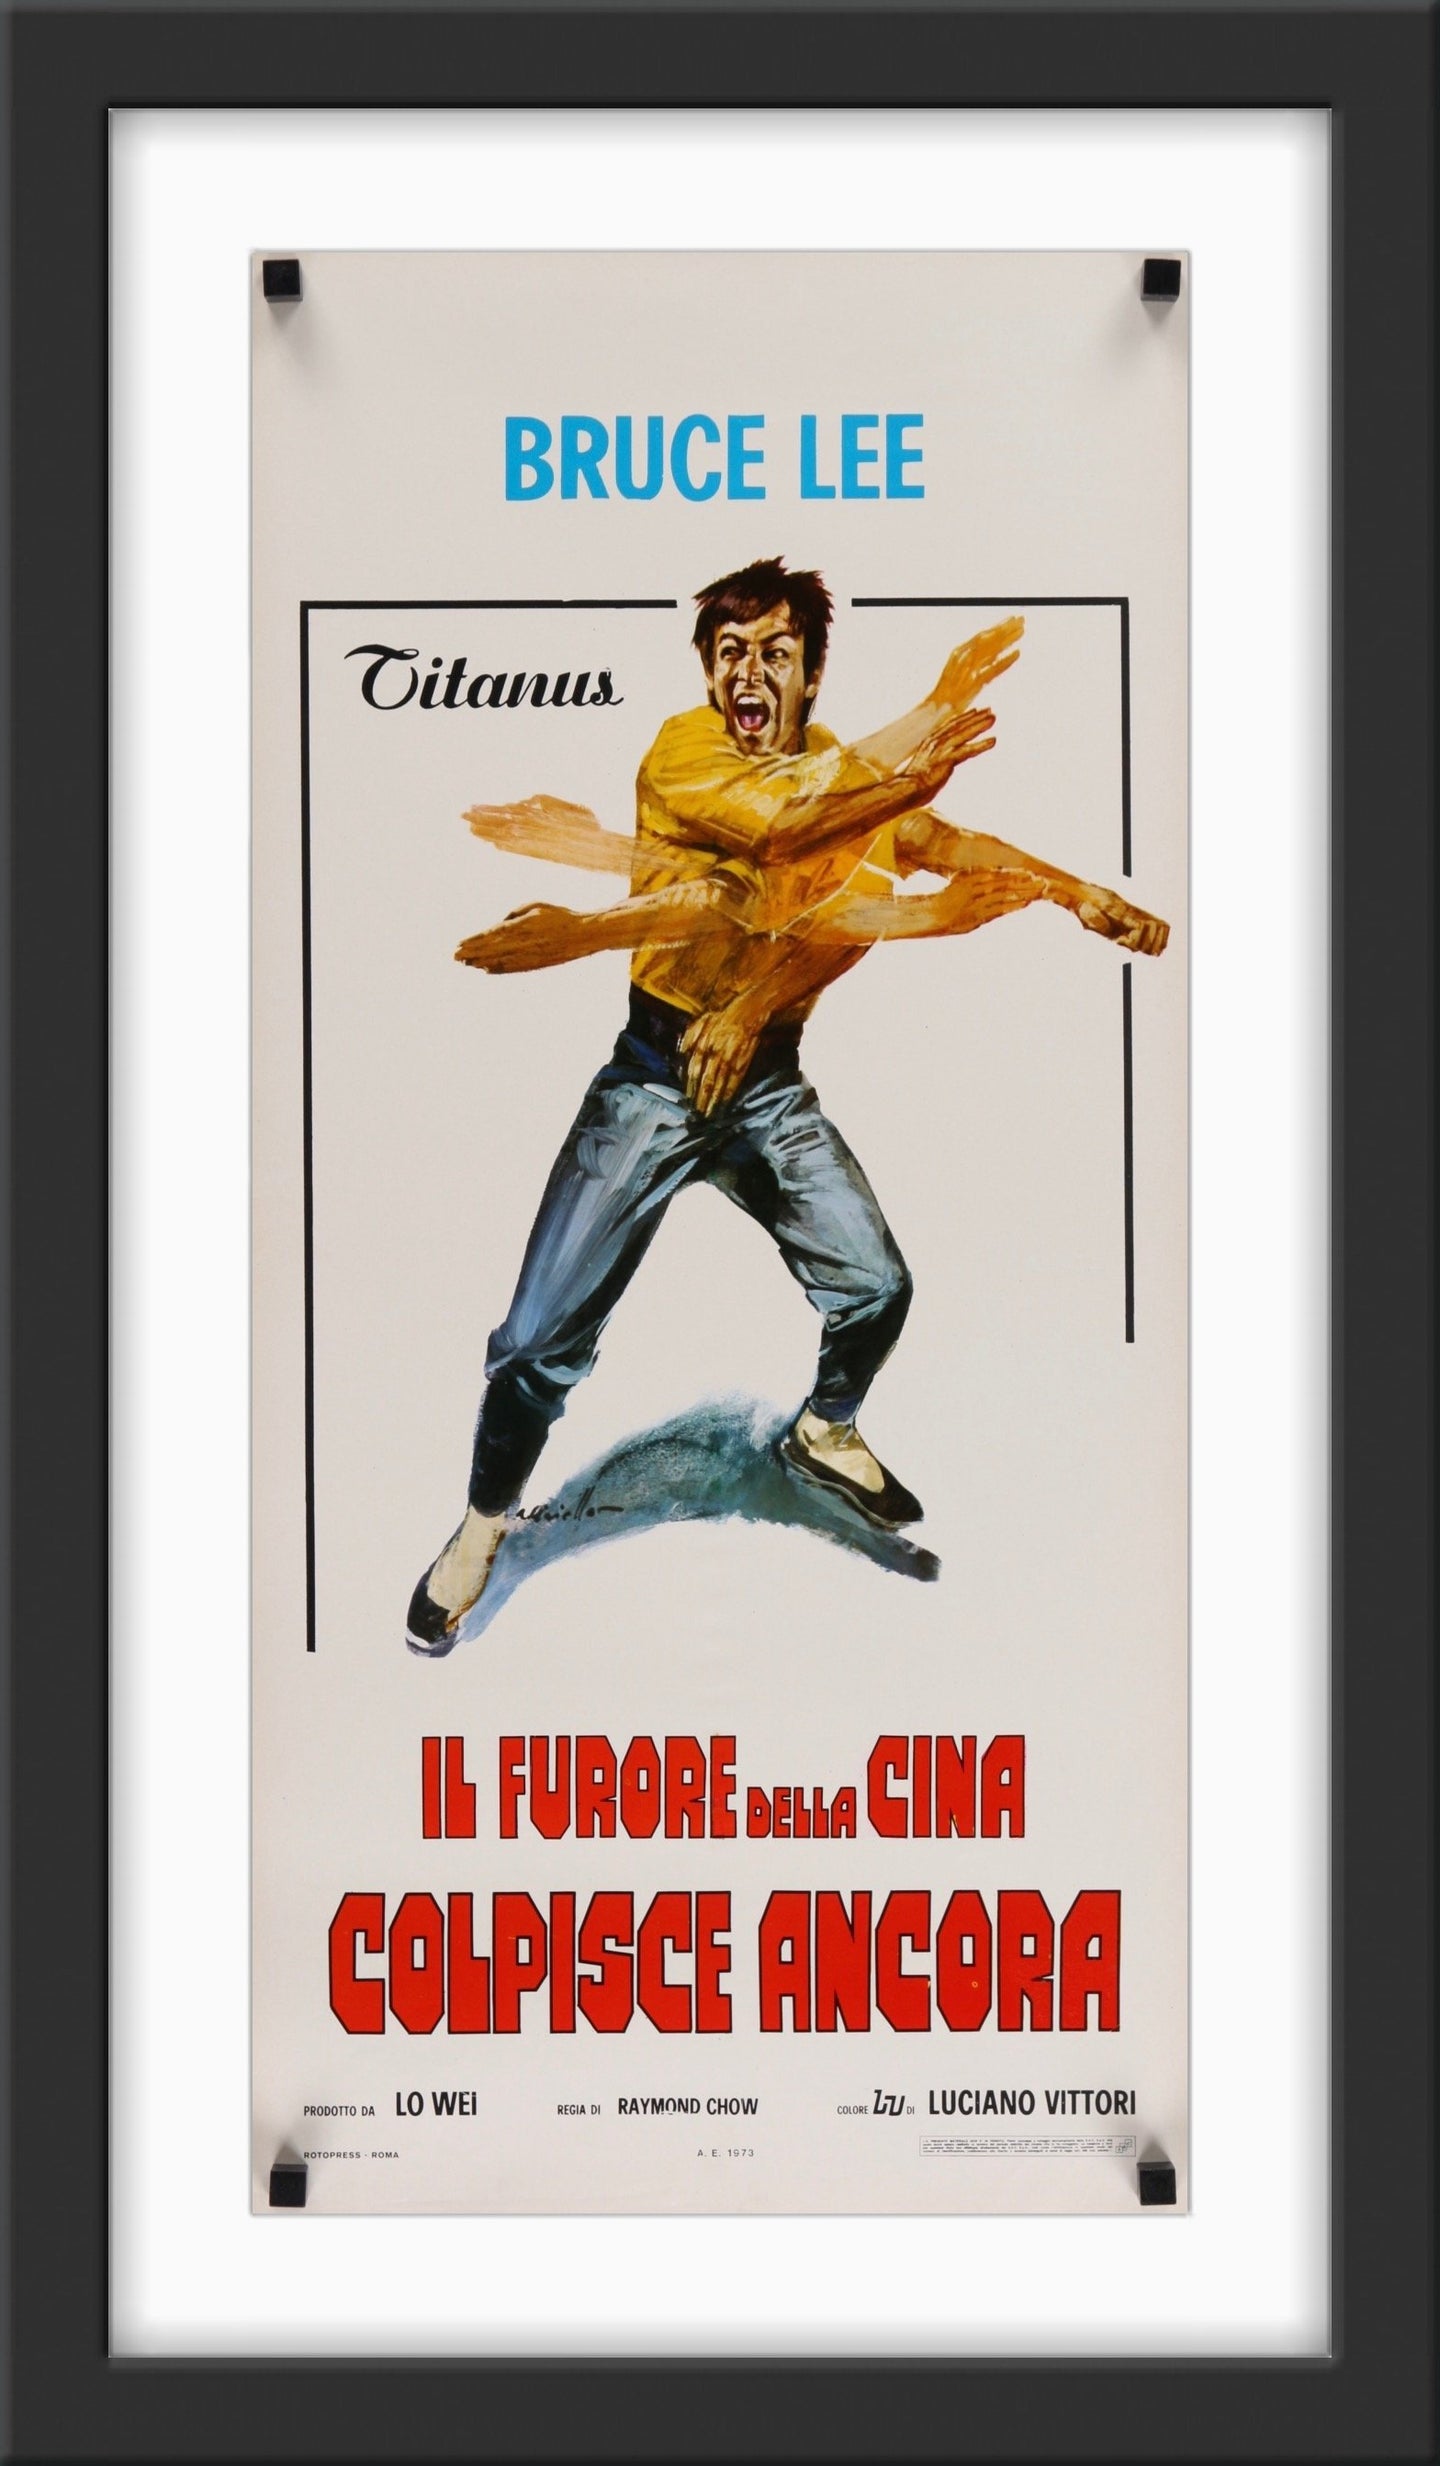 An original Italian Locandina for the Bruce Lee film Fists of Fury